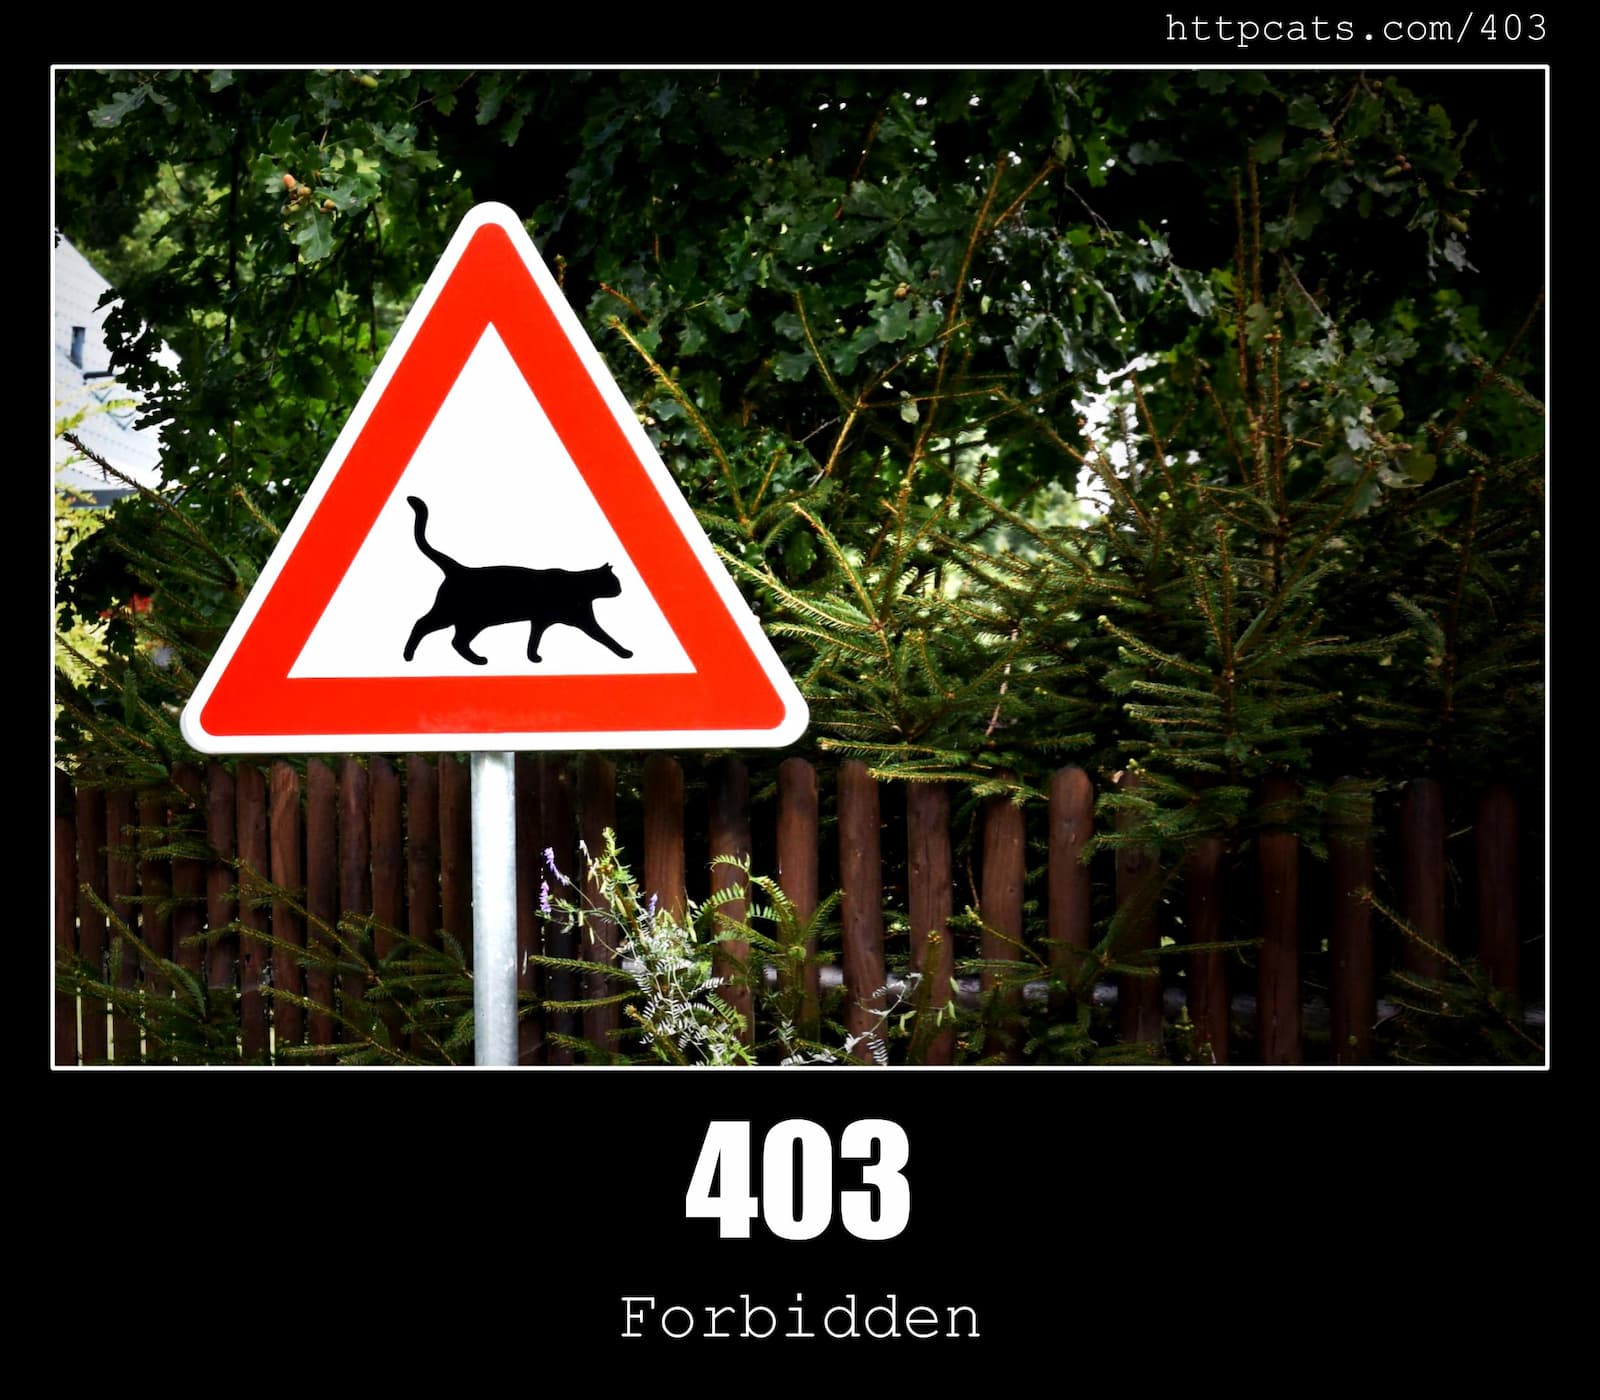 403 - Forbidden